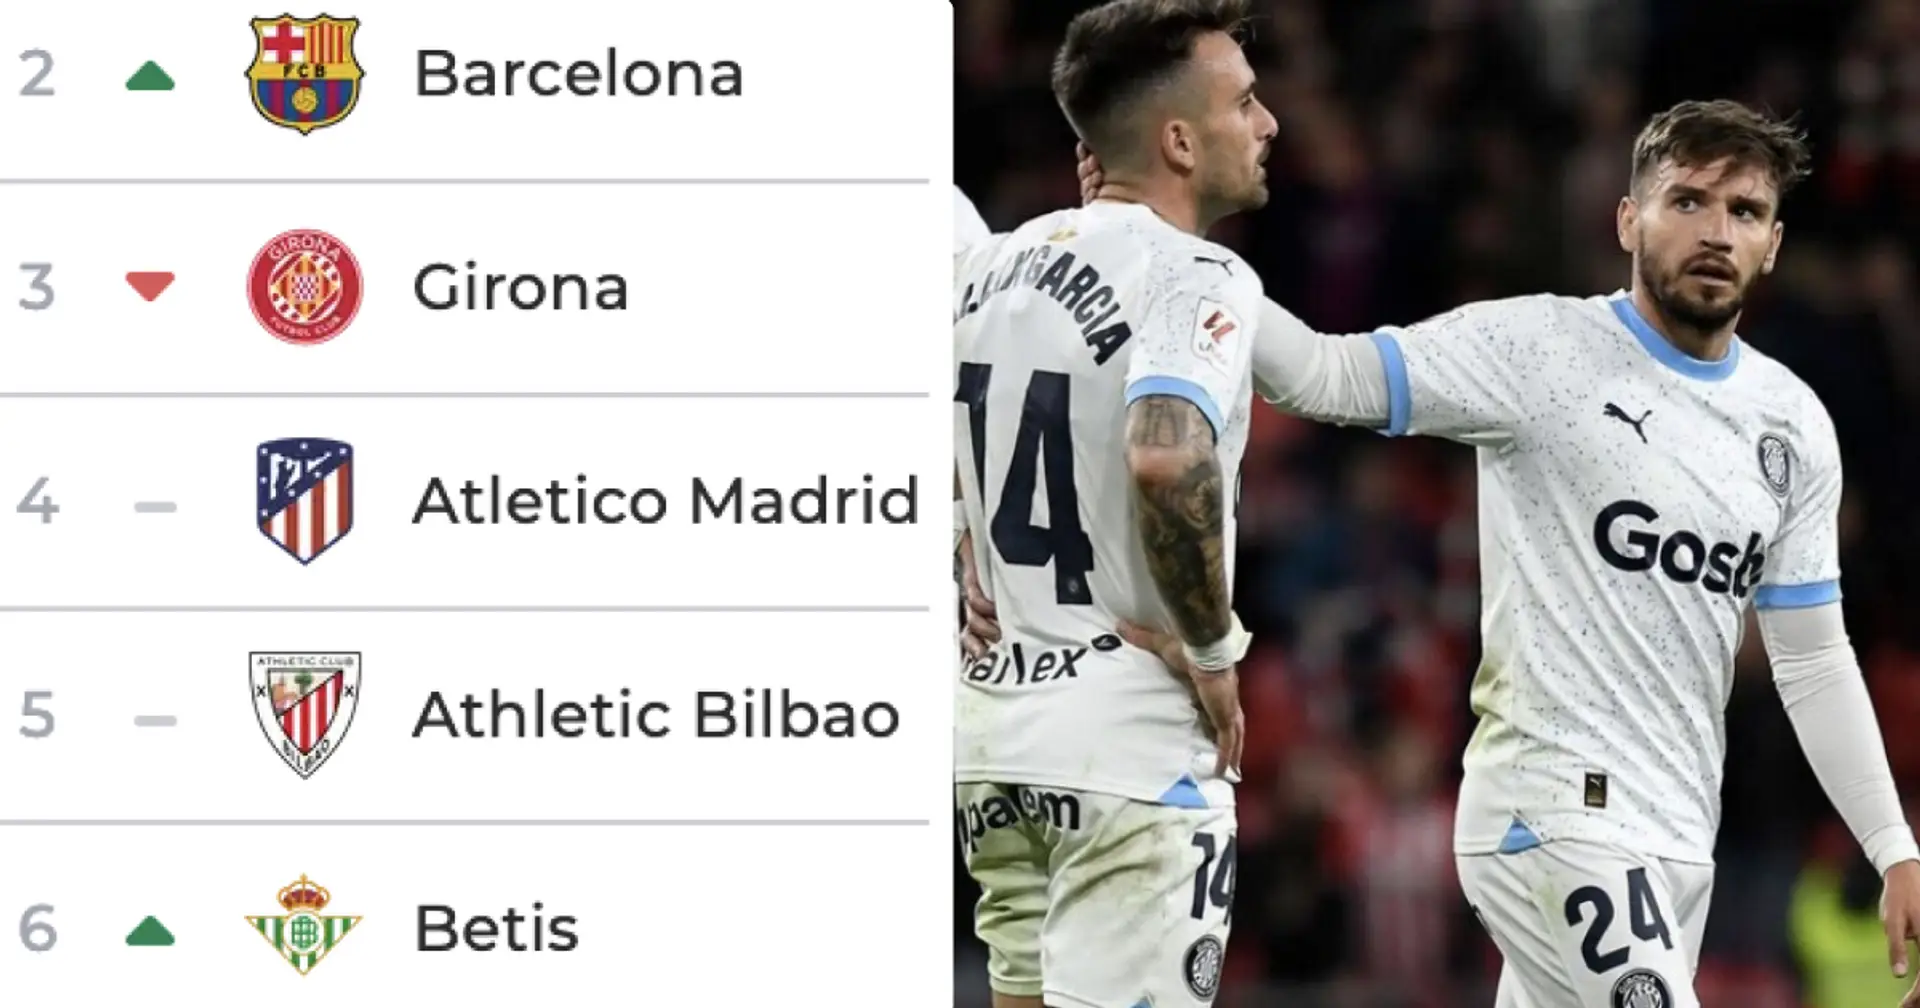 Girona drop points AGAIN: La Liga standings